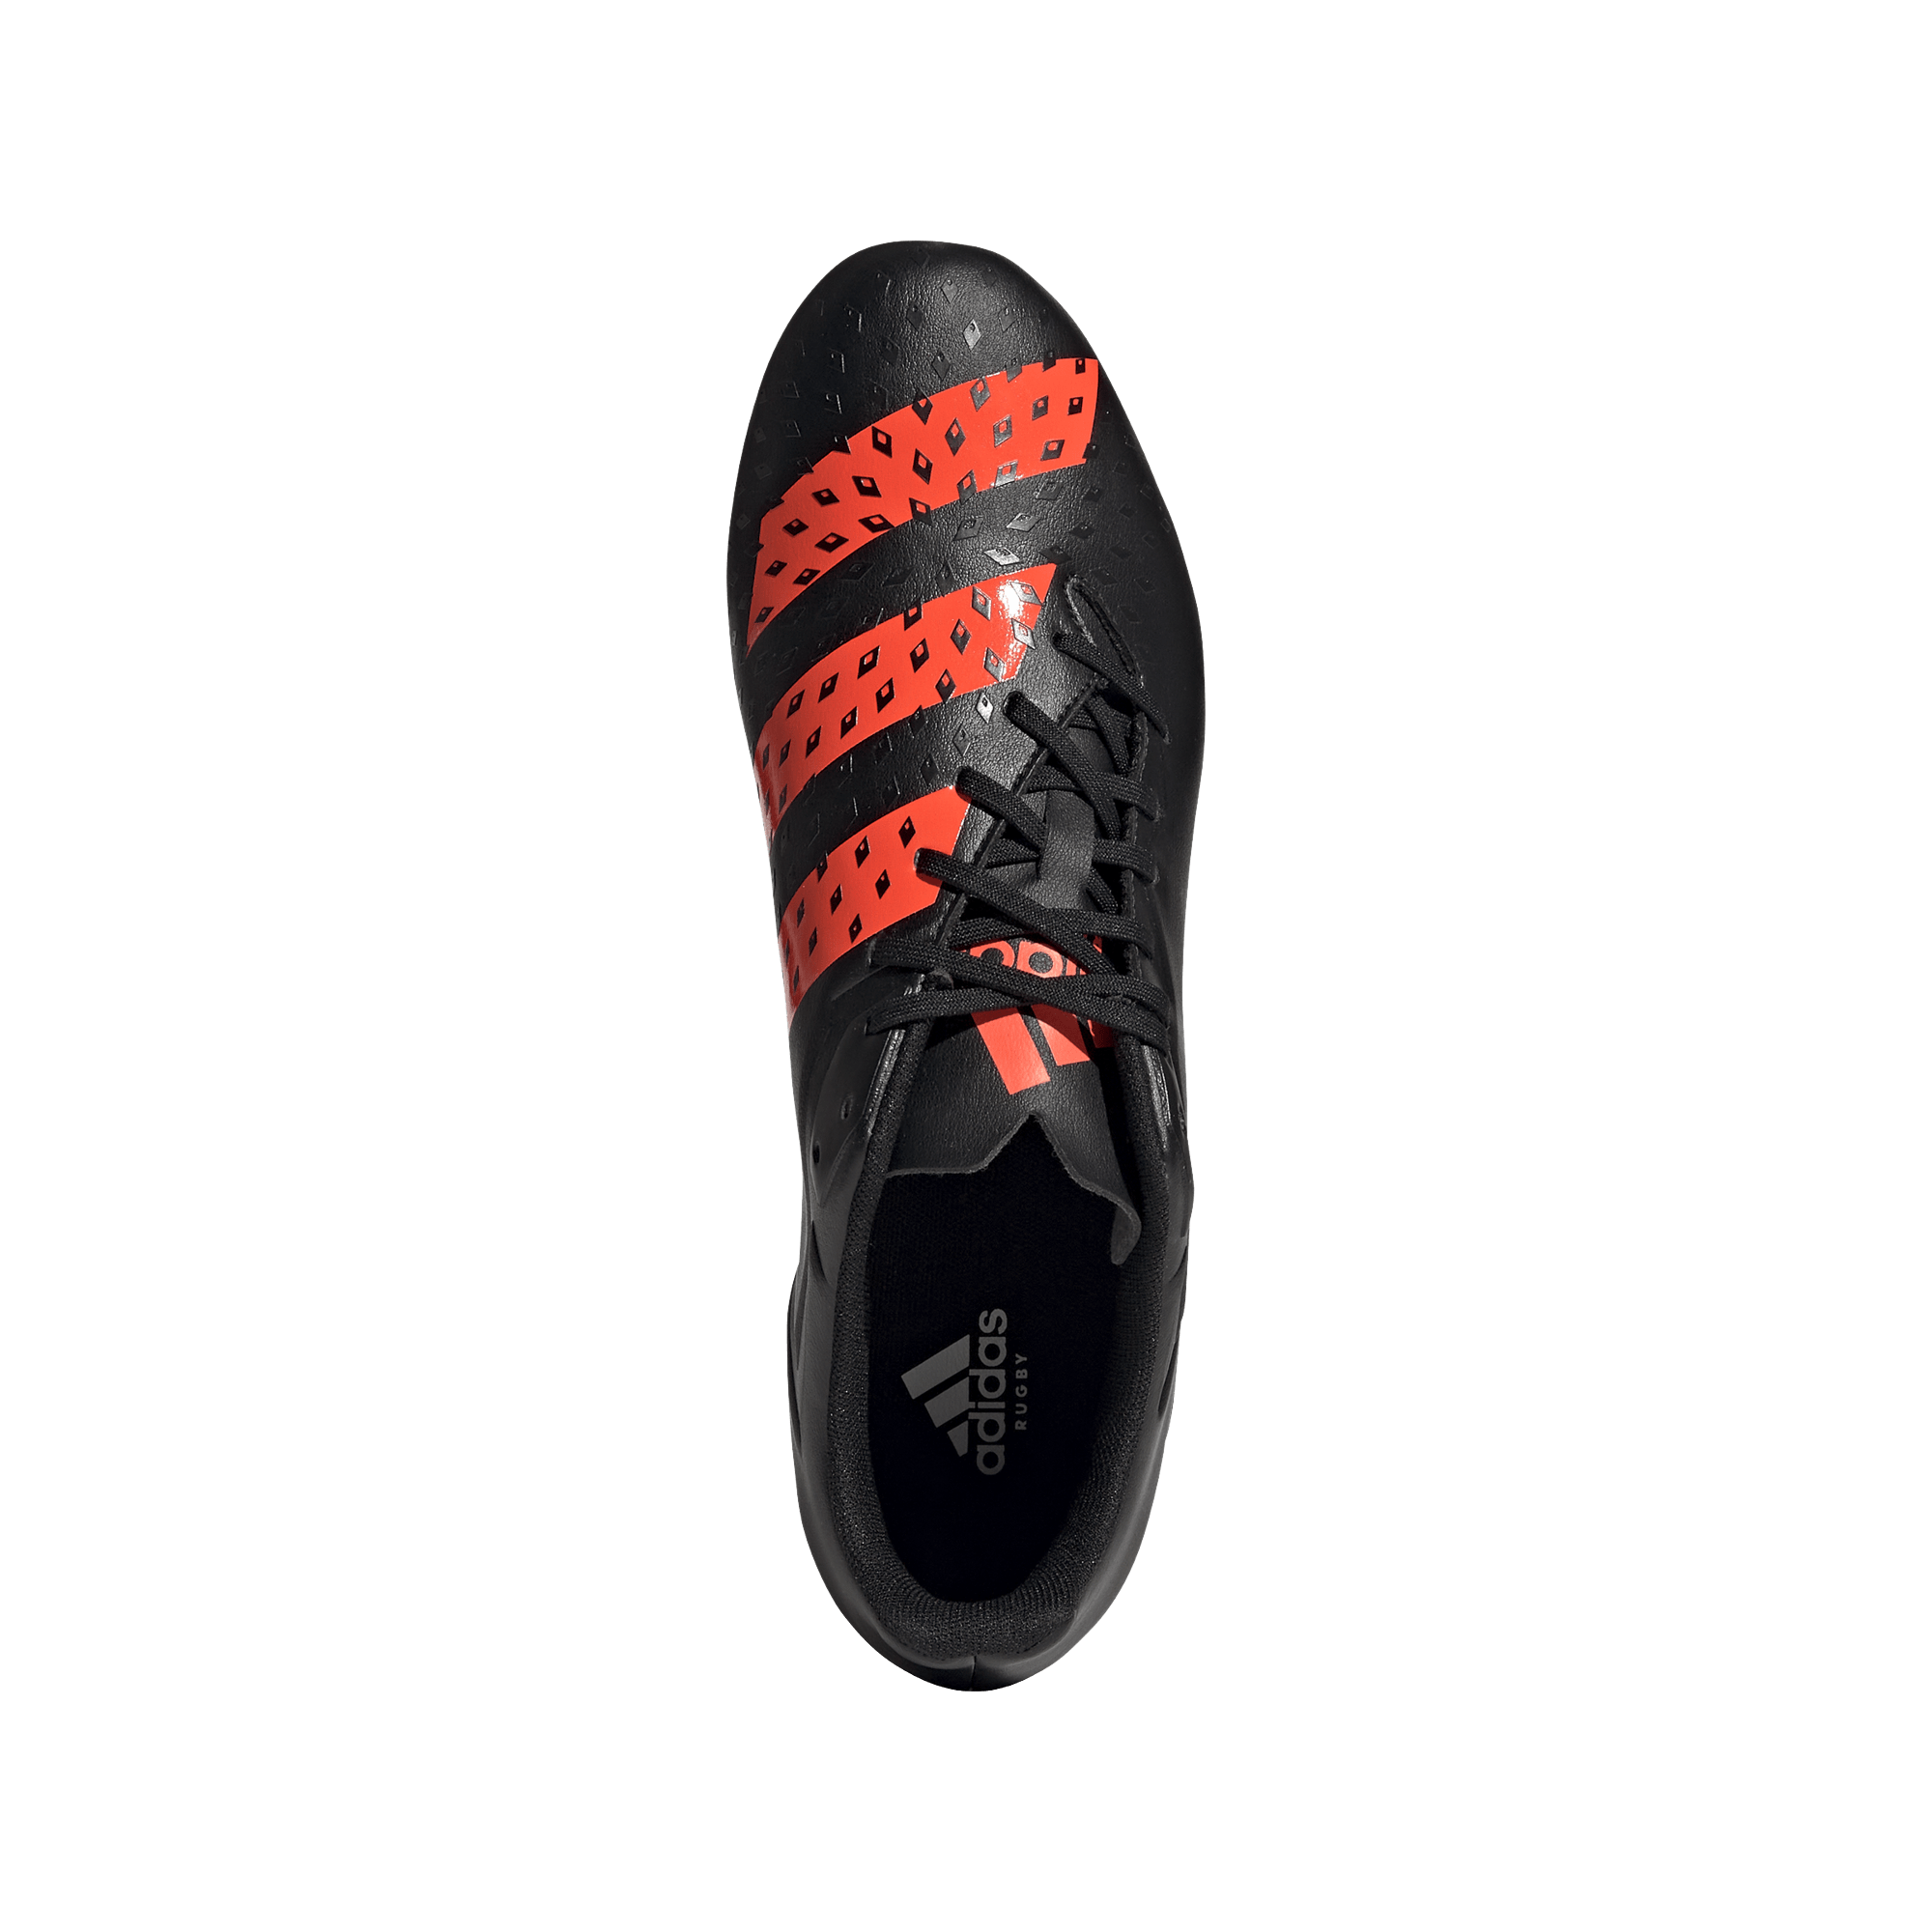 Adidas Malice Rugby Cleat - Soft Ground Boot - Black/Orange - SKU FZ5369 - Rugby Shop